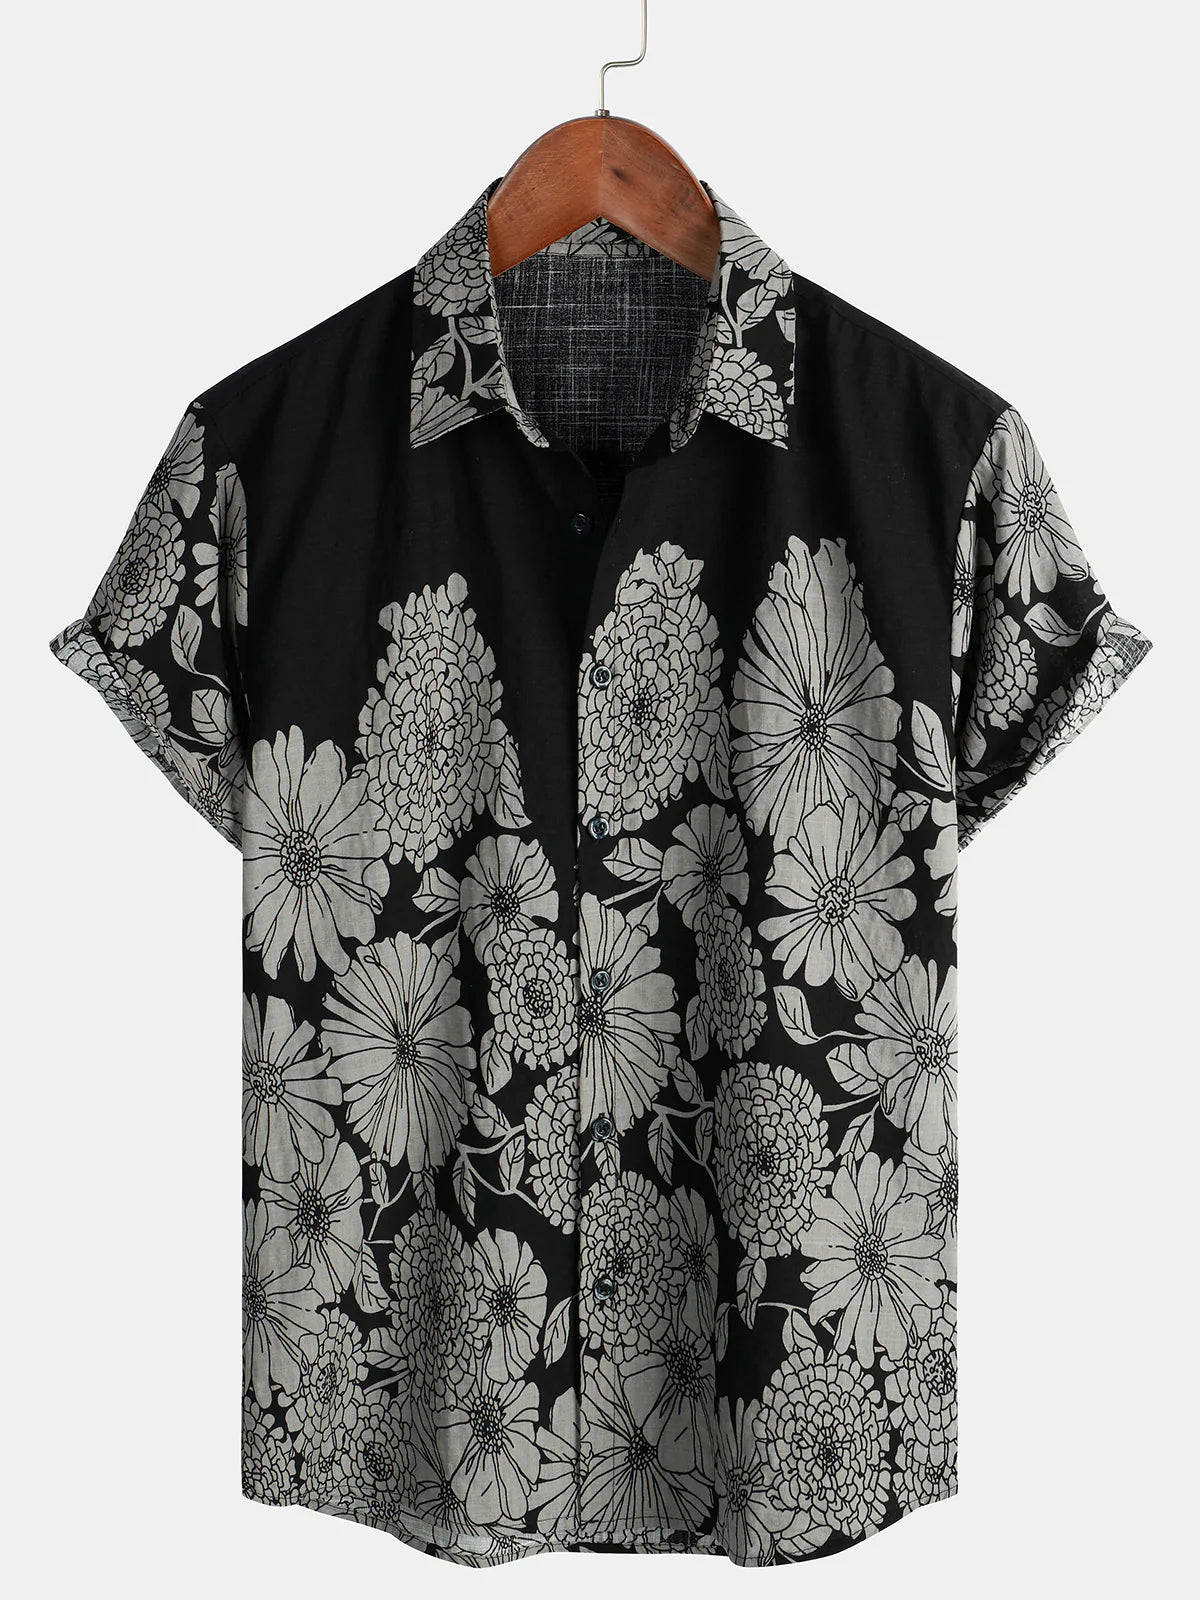 Men's Cotton Daisy Print Flowers Holiday Black Floral Short Sleeve Shirt